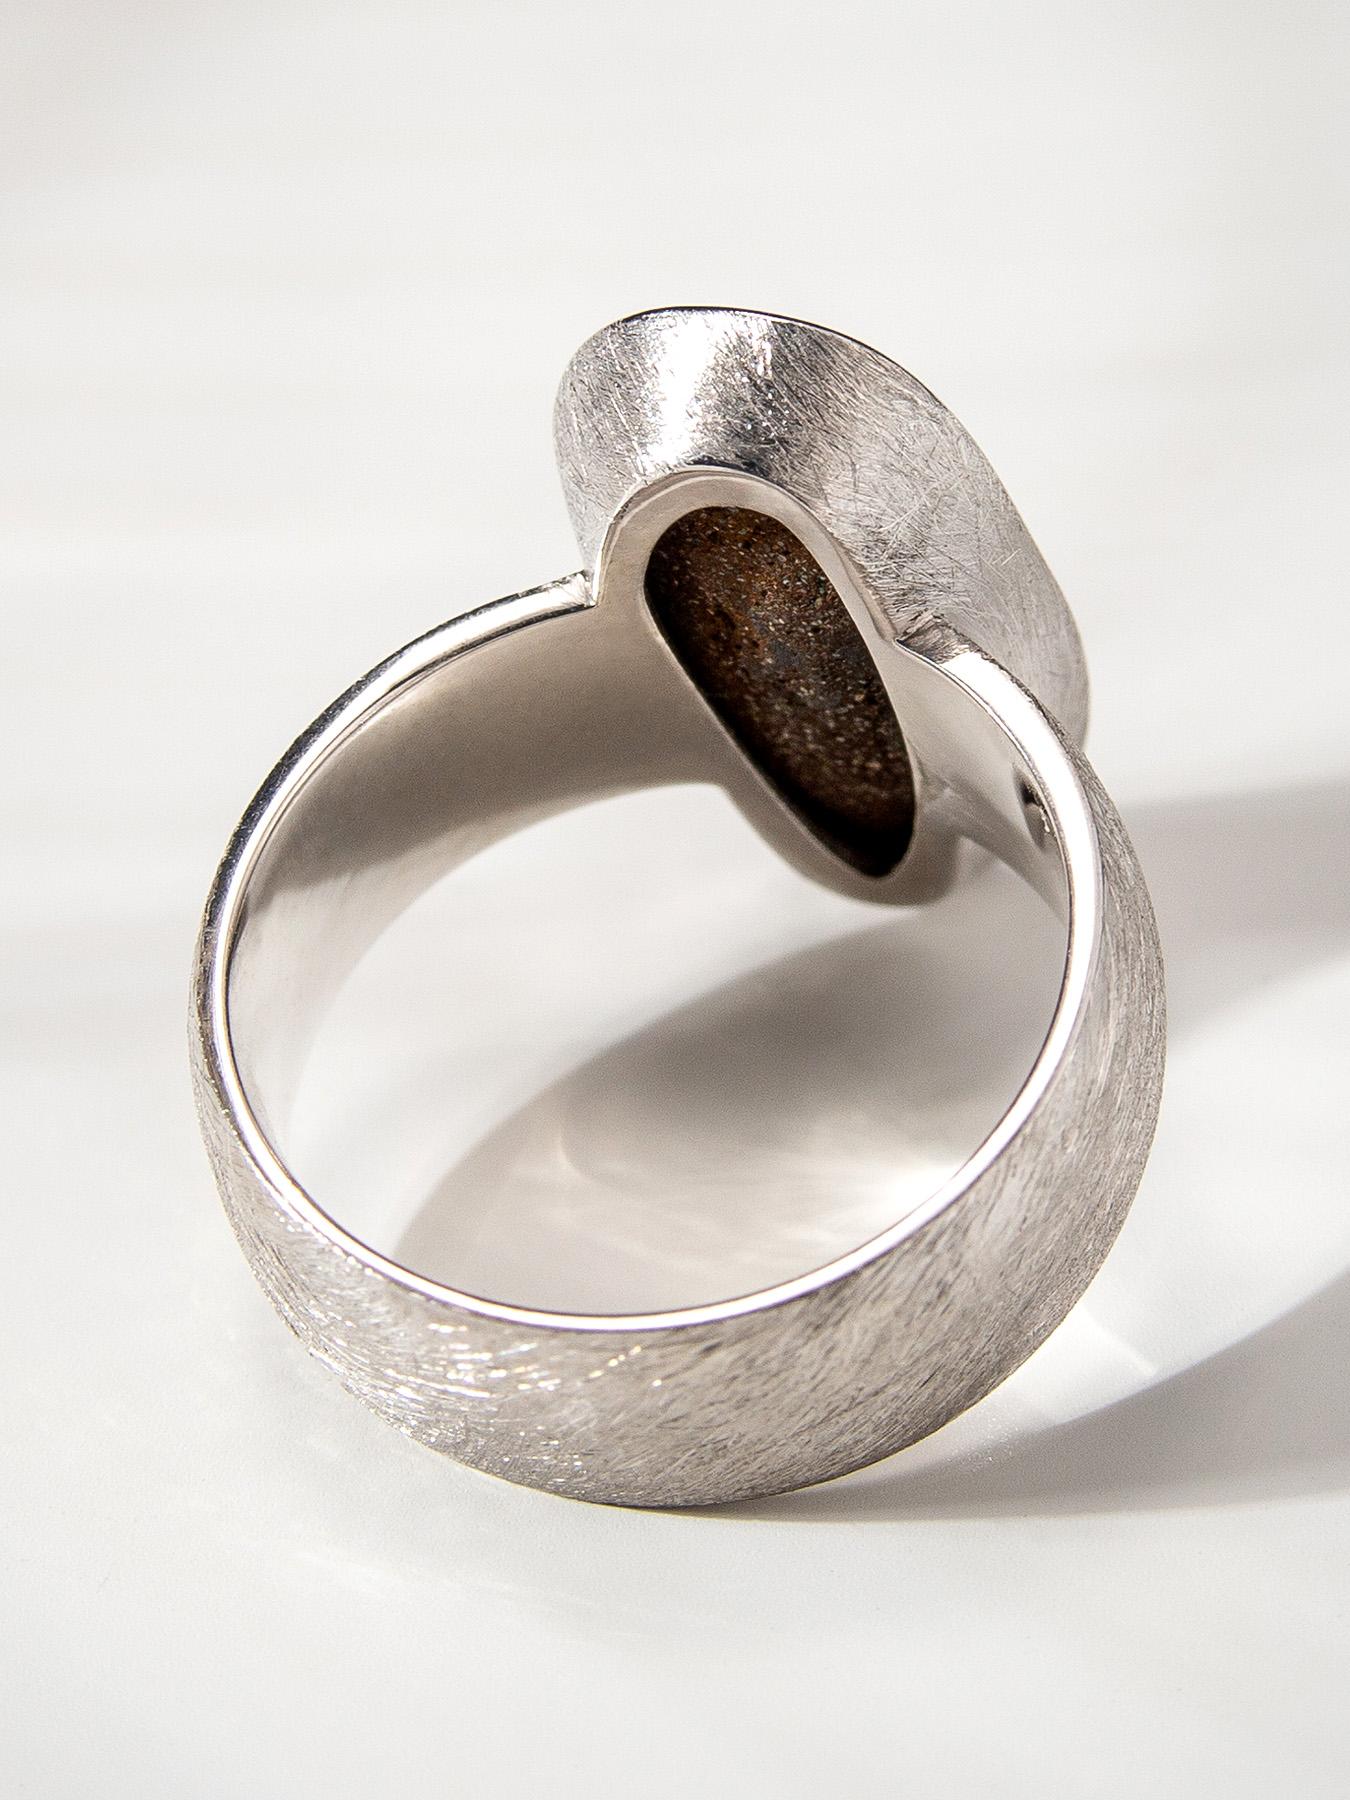 Boulder Opal Scratched Silver Ring Cosmic Dust Australian Gemstone Jewelry In New Condition For Sale In Berlin, DE